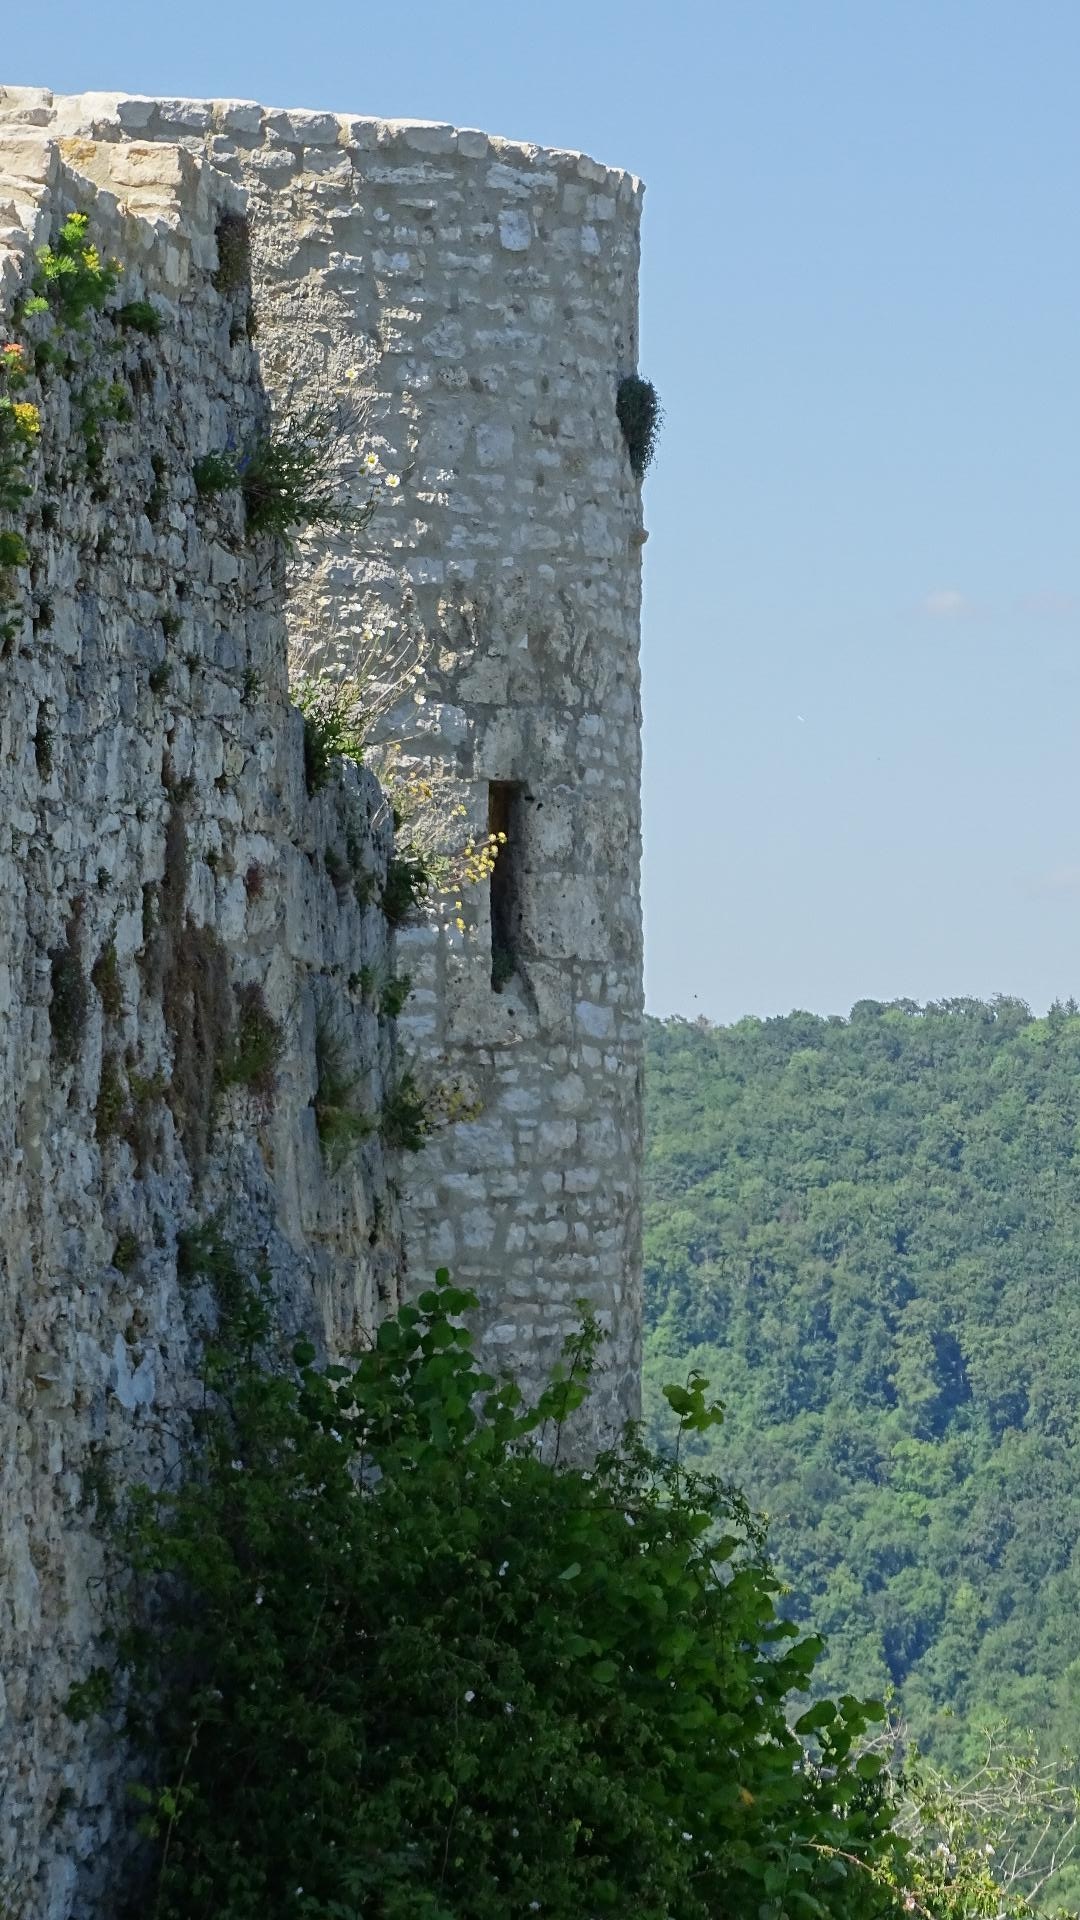 Turm der Burgruine